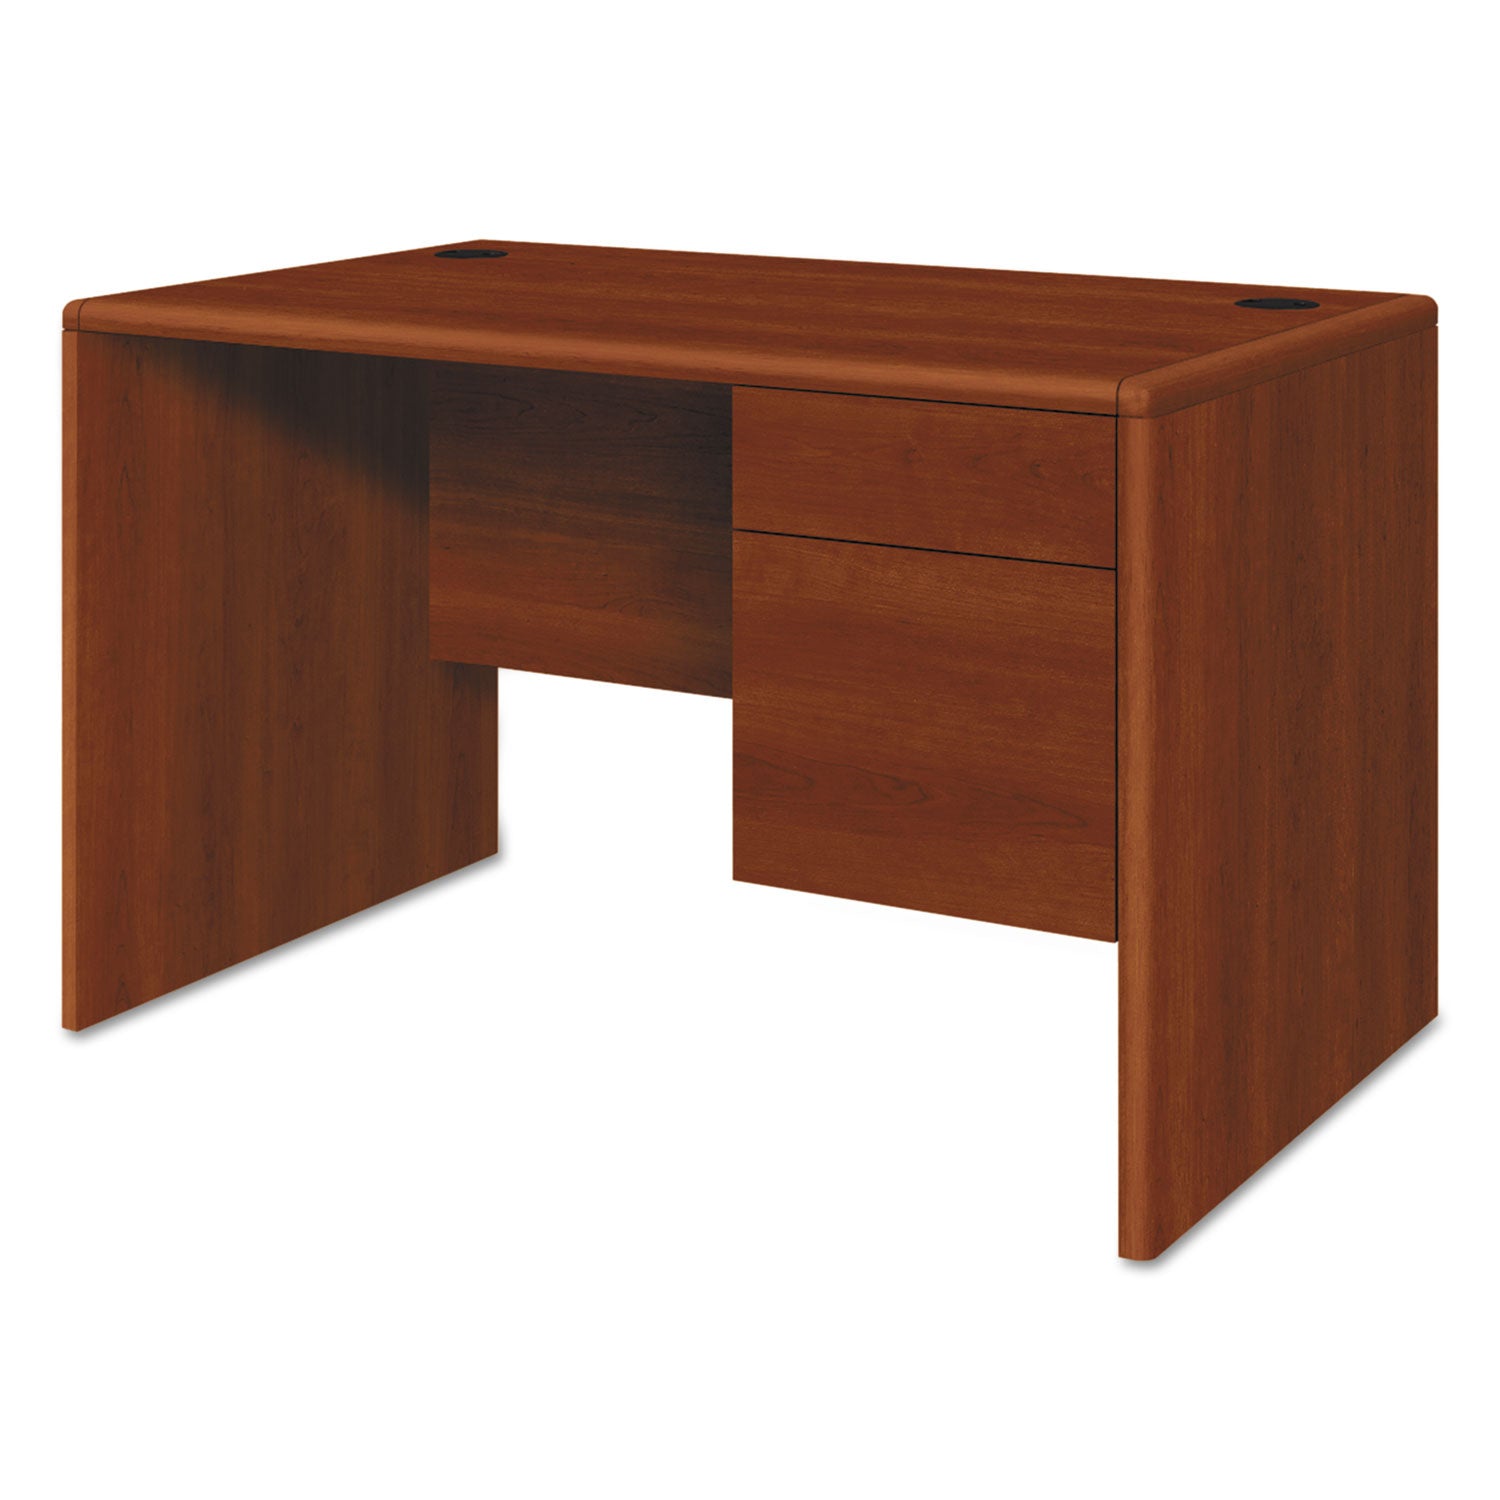 10700 Series Single Pedestal Desk with Three-Quarter Height Right Pedestal, 48" x 30" x 29.5", Cognac - 